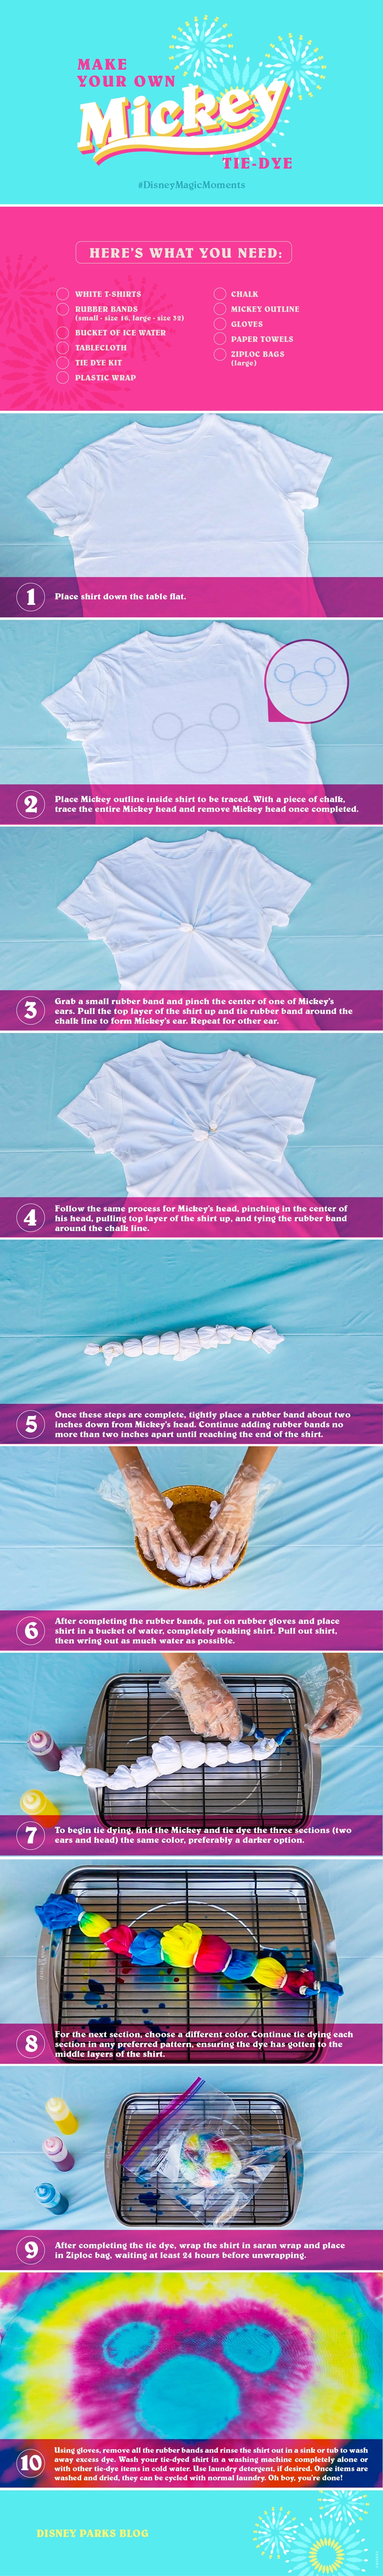 Mickey Tie-Dye Shirt Instructions